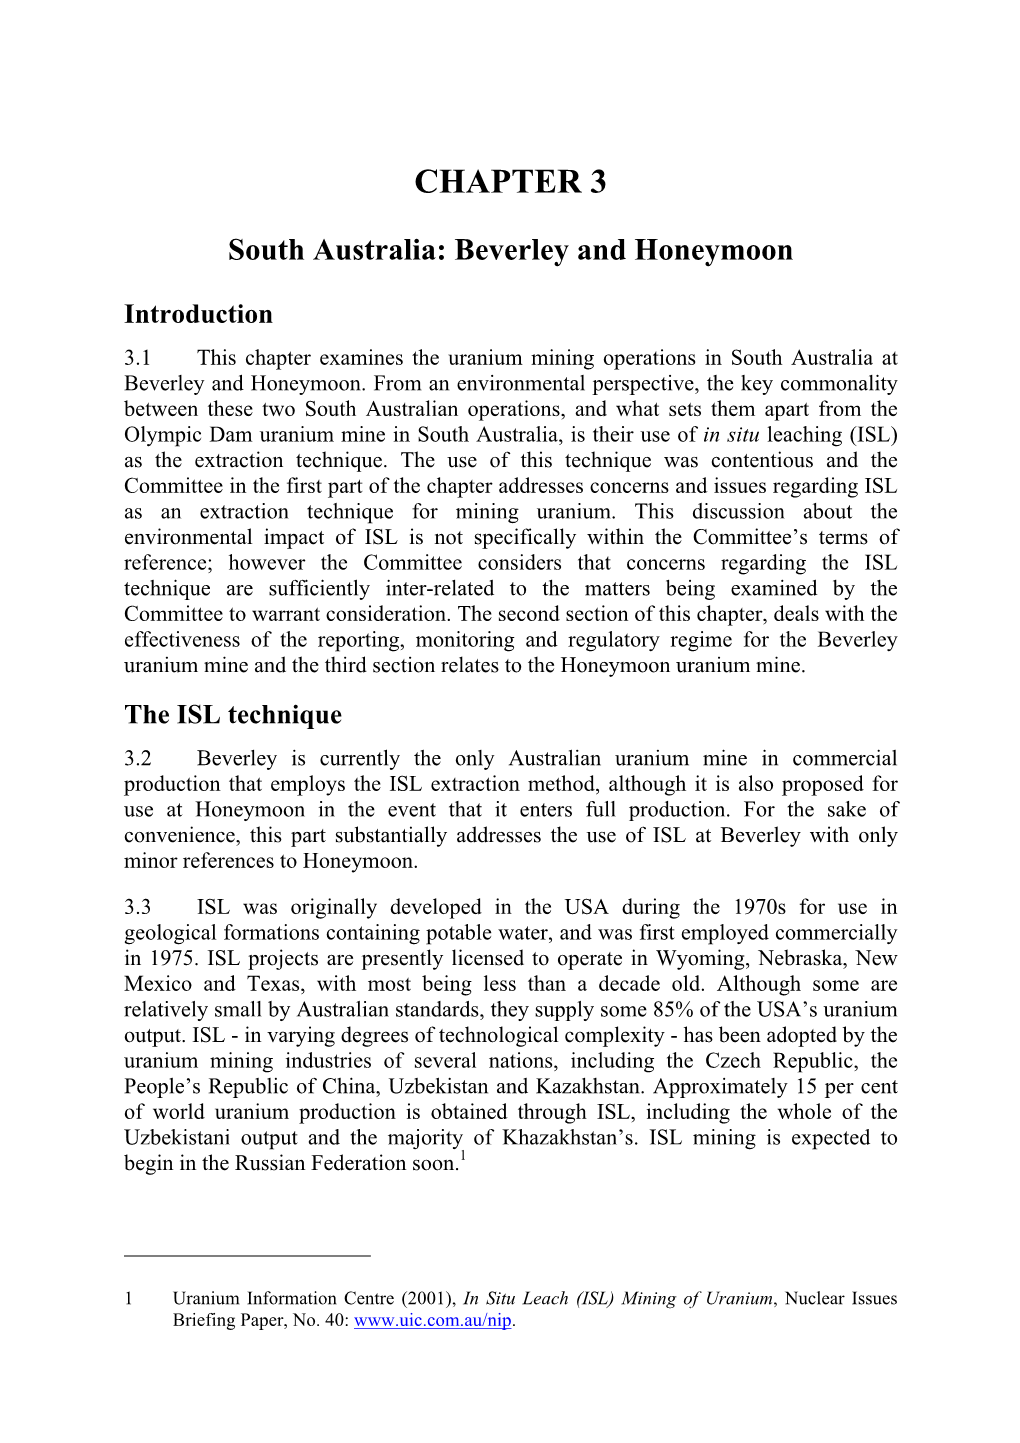 South Australia: Beverley and Honeymoon